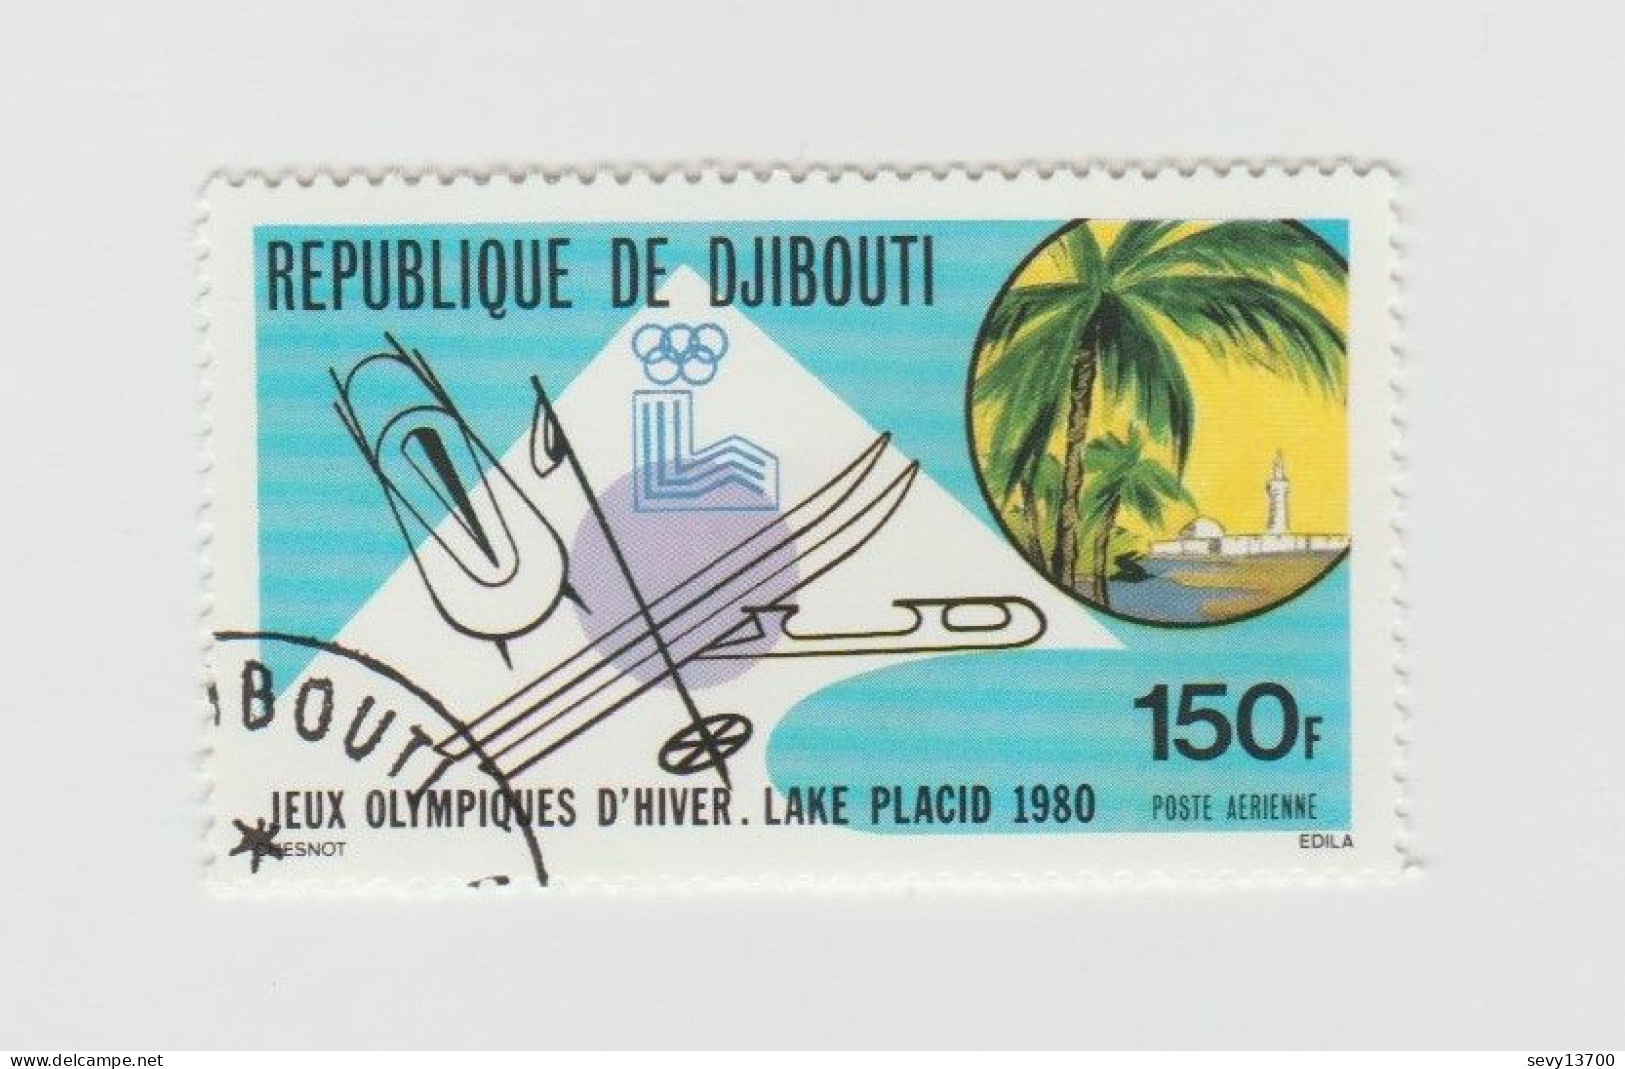 Djibouti 14 Timbres Jeux Olympiques De Moscou Los Angeles Lake Placid Coupe Du Monde Foot Ball Basket Marathon - Djibouti (1977-...)